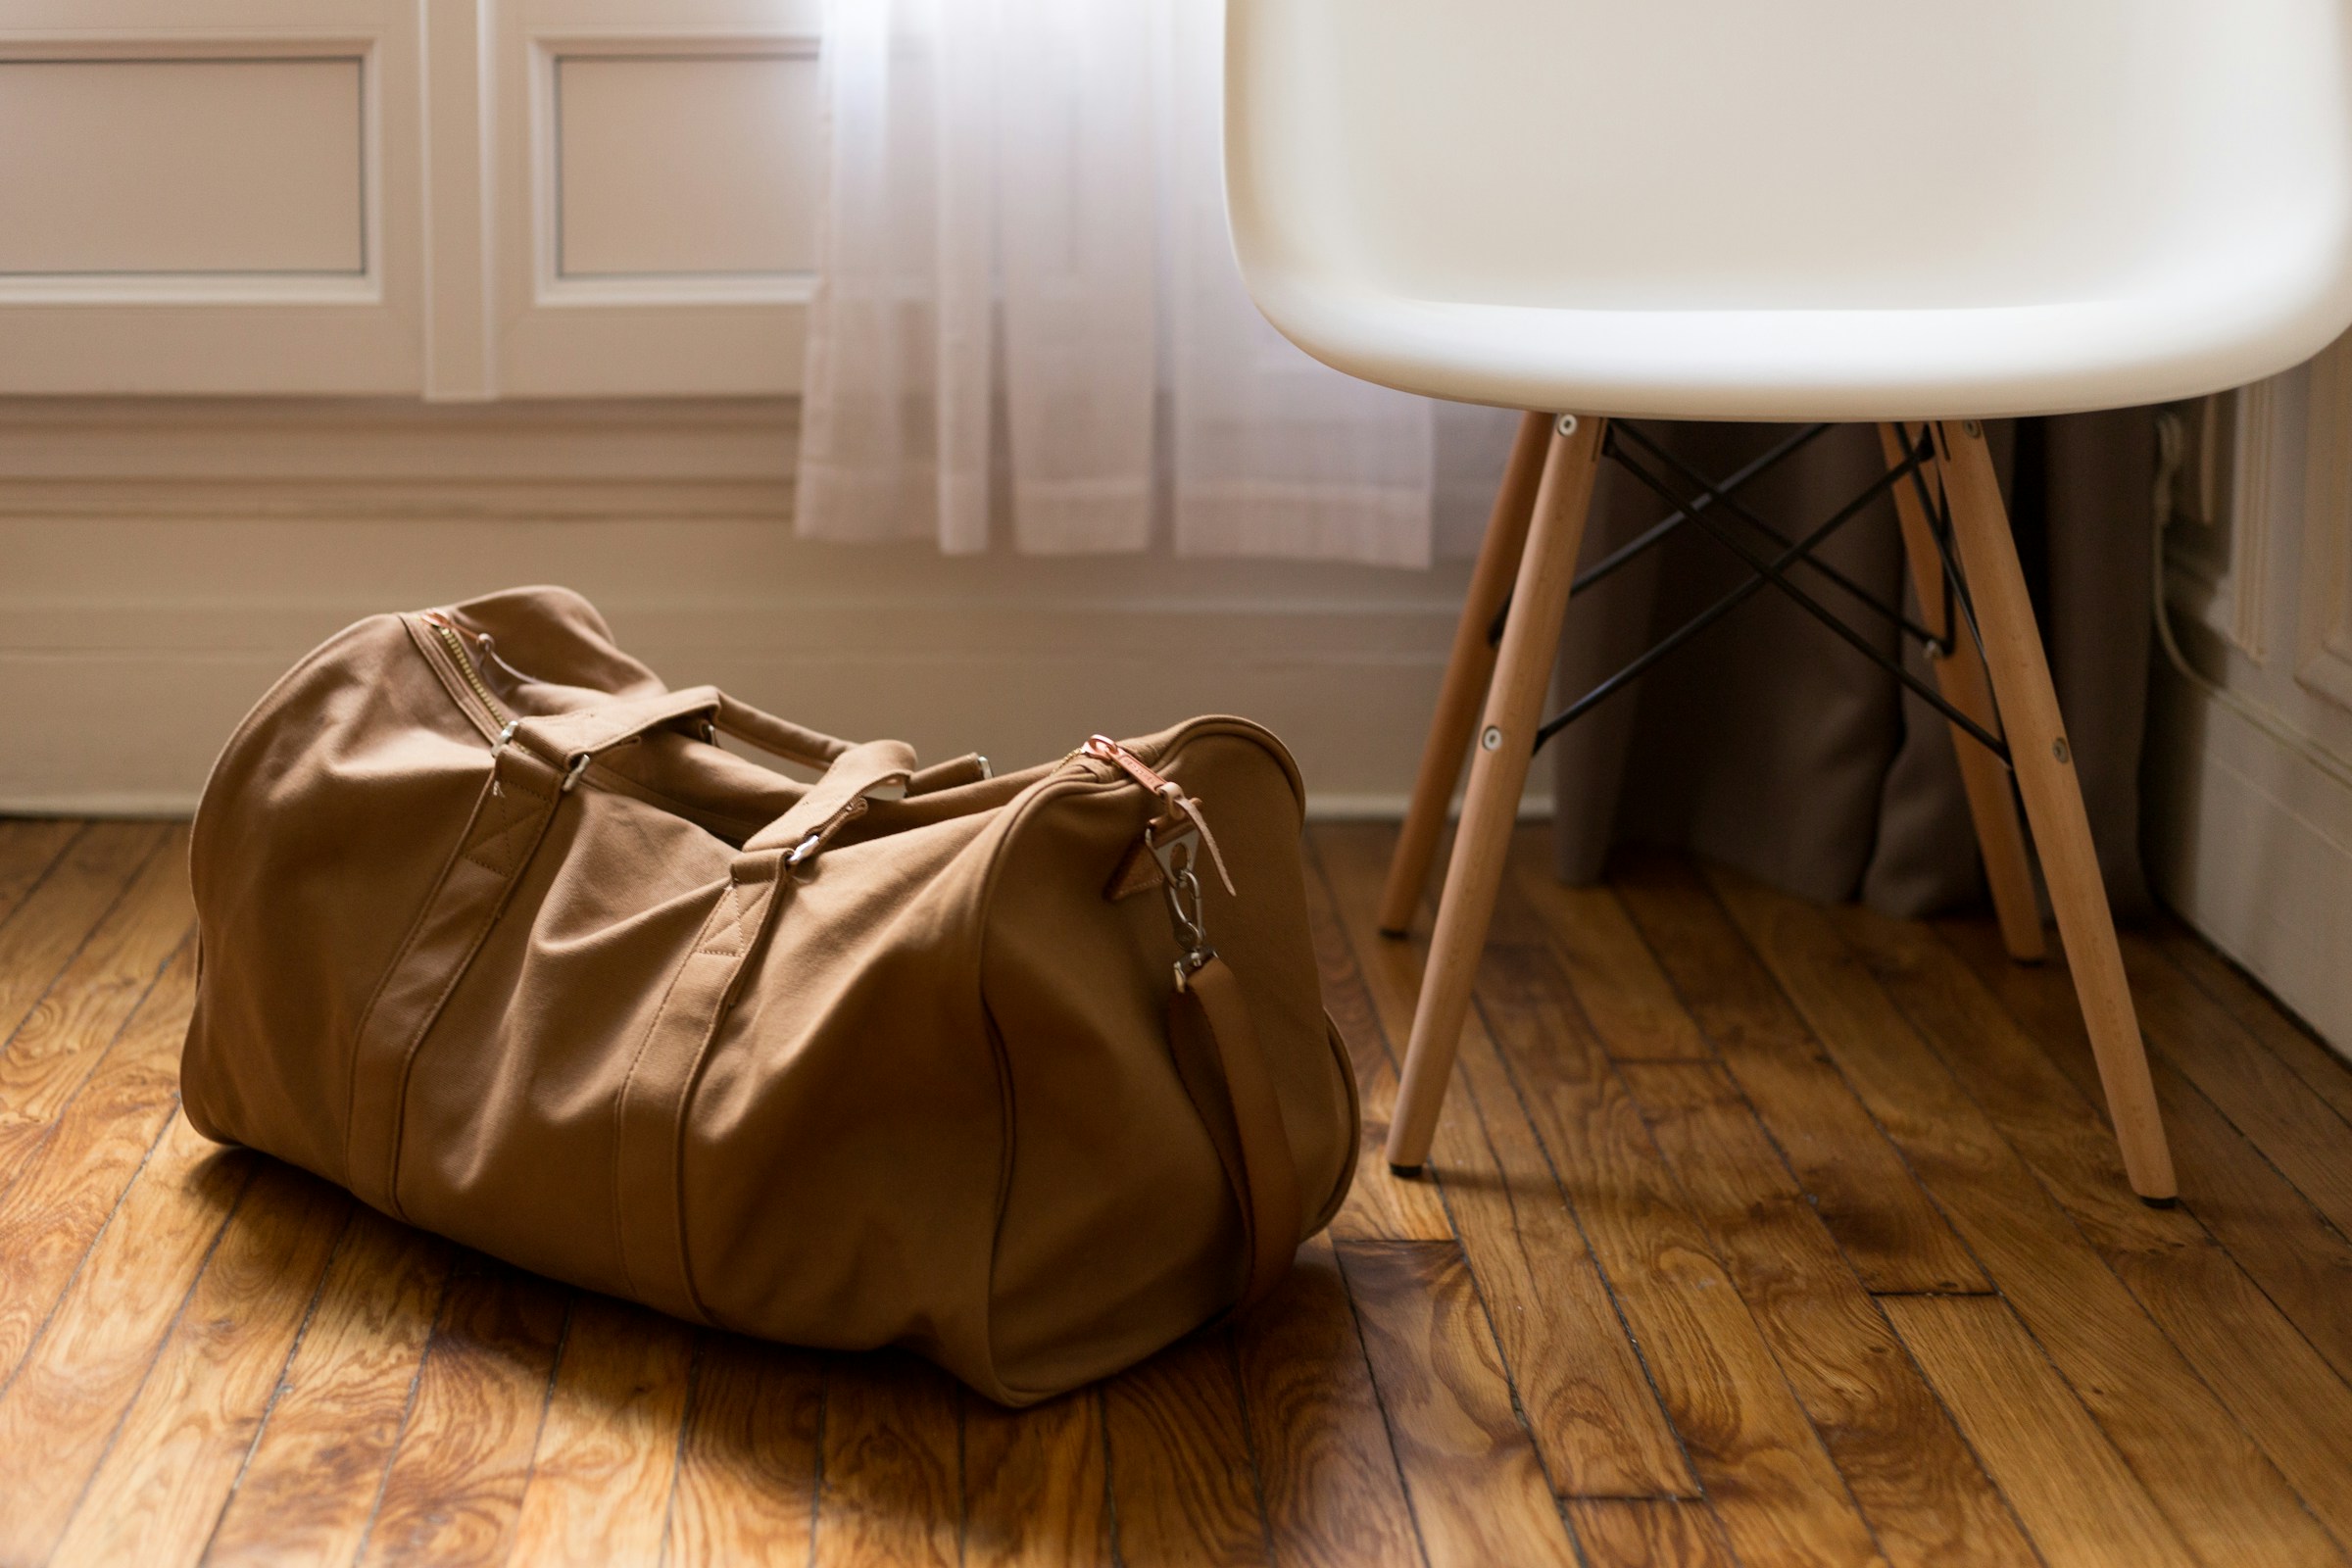 A brown duffel bag on the floor | Source: Unsplash